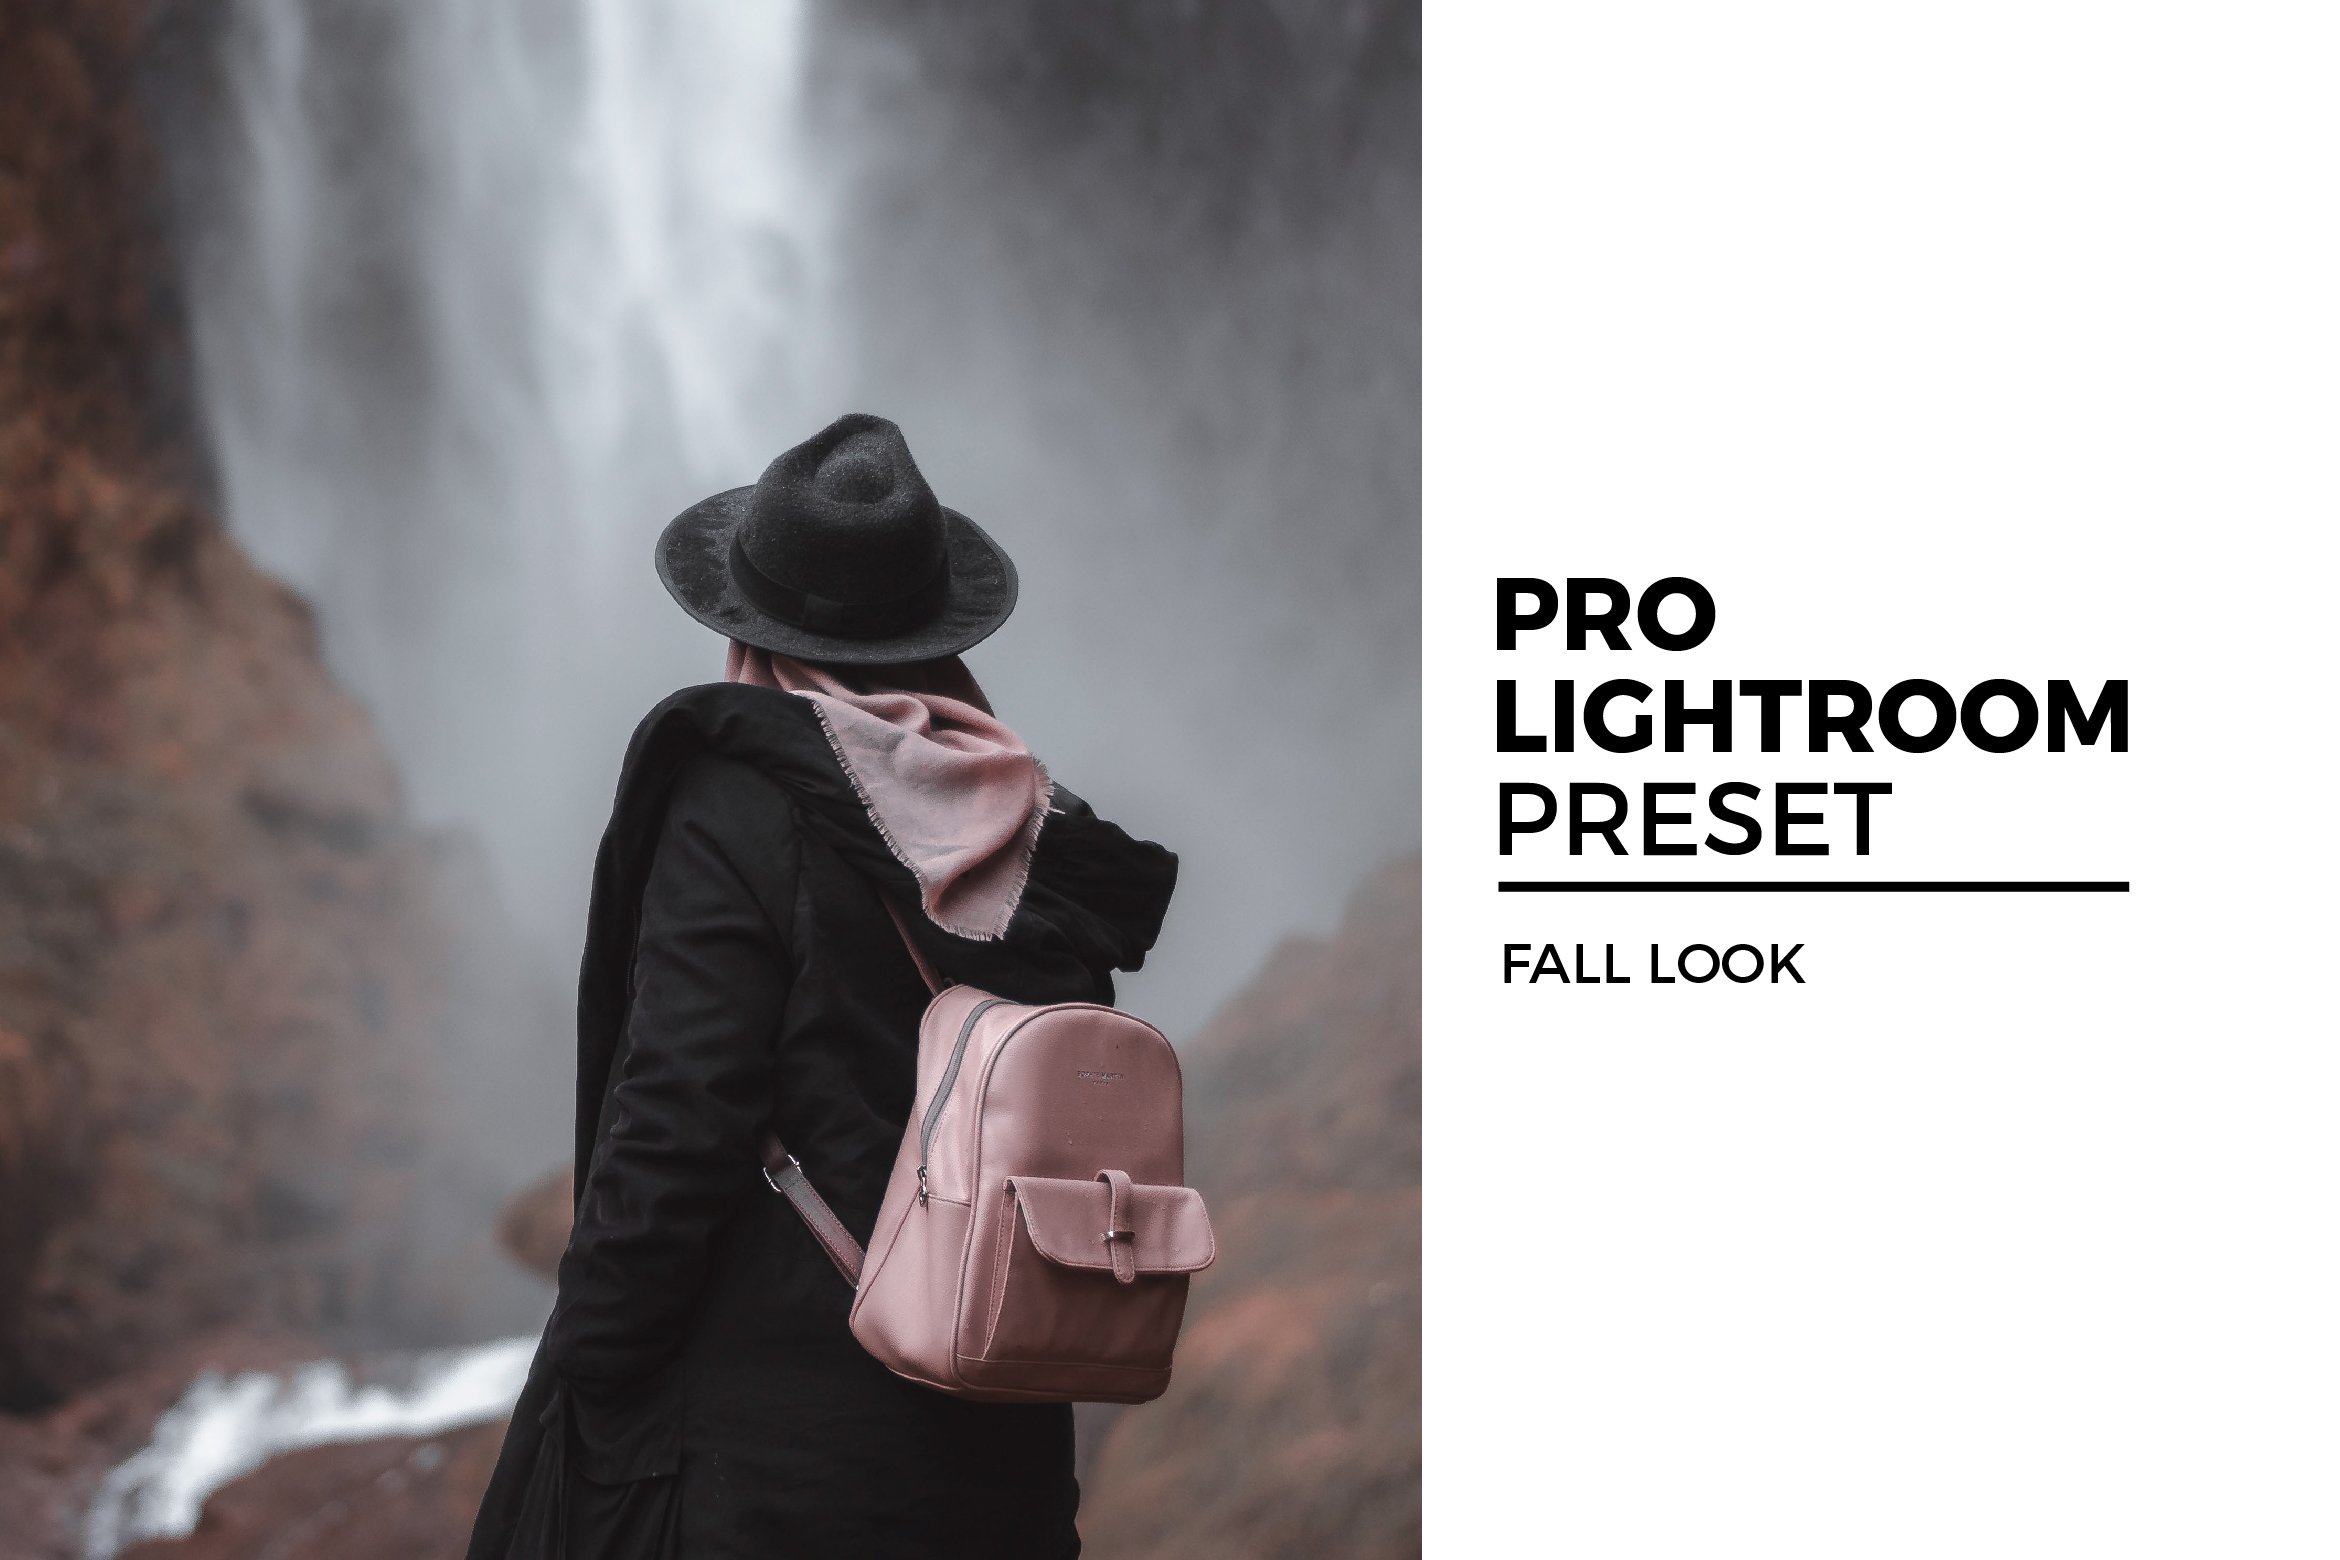 Fall Look Lightroom Presetcover image.